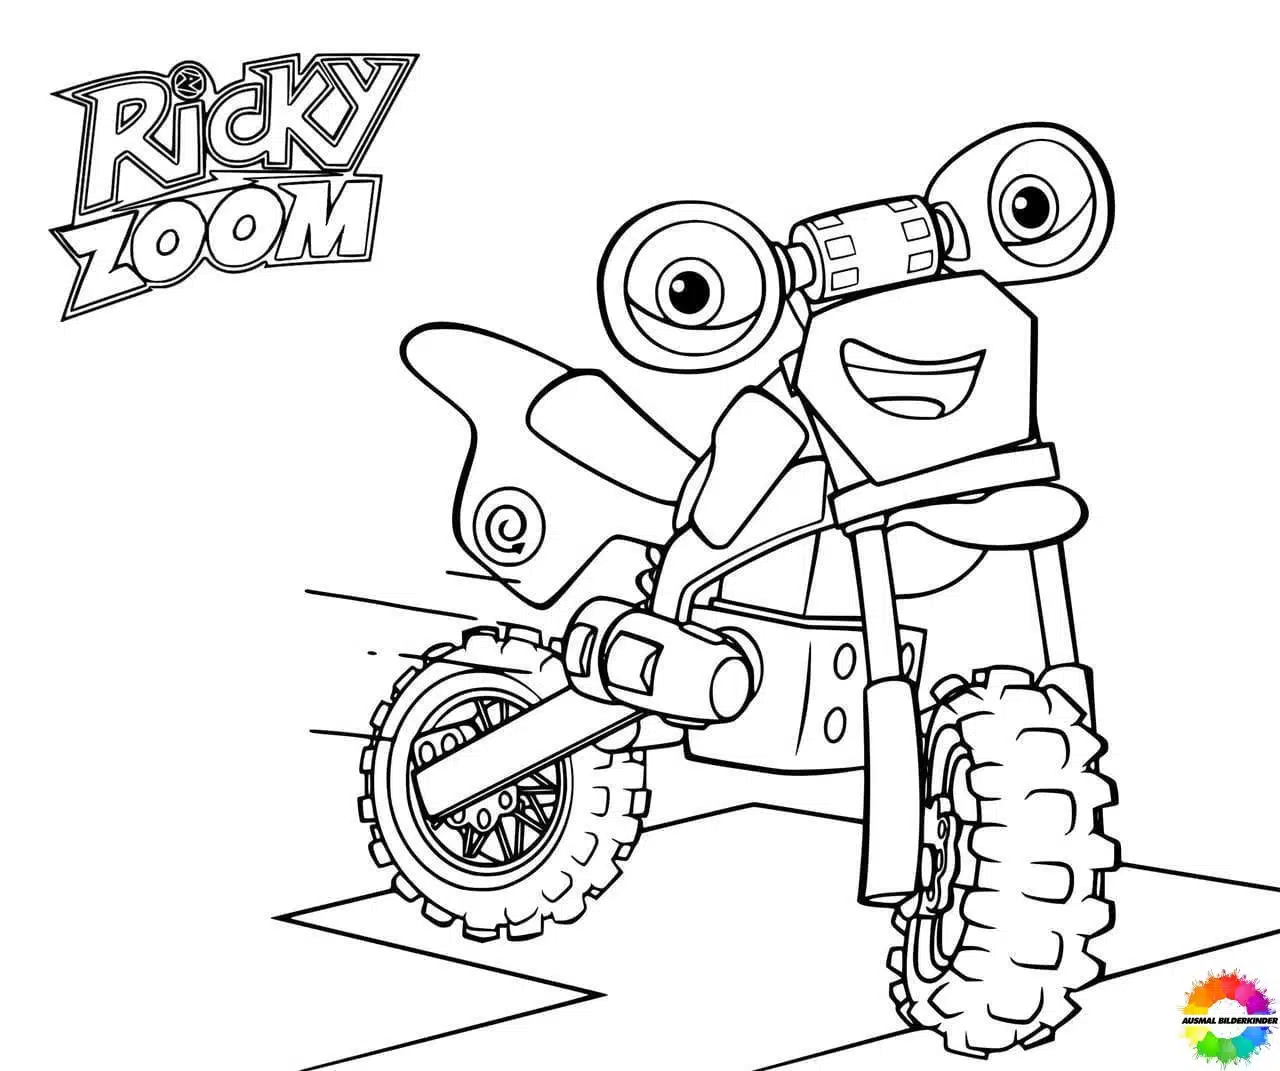 Ricky Zoom 17